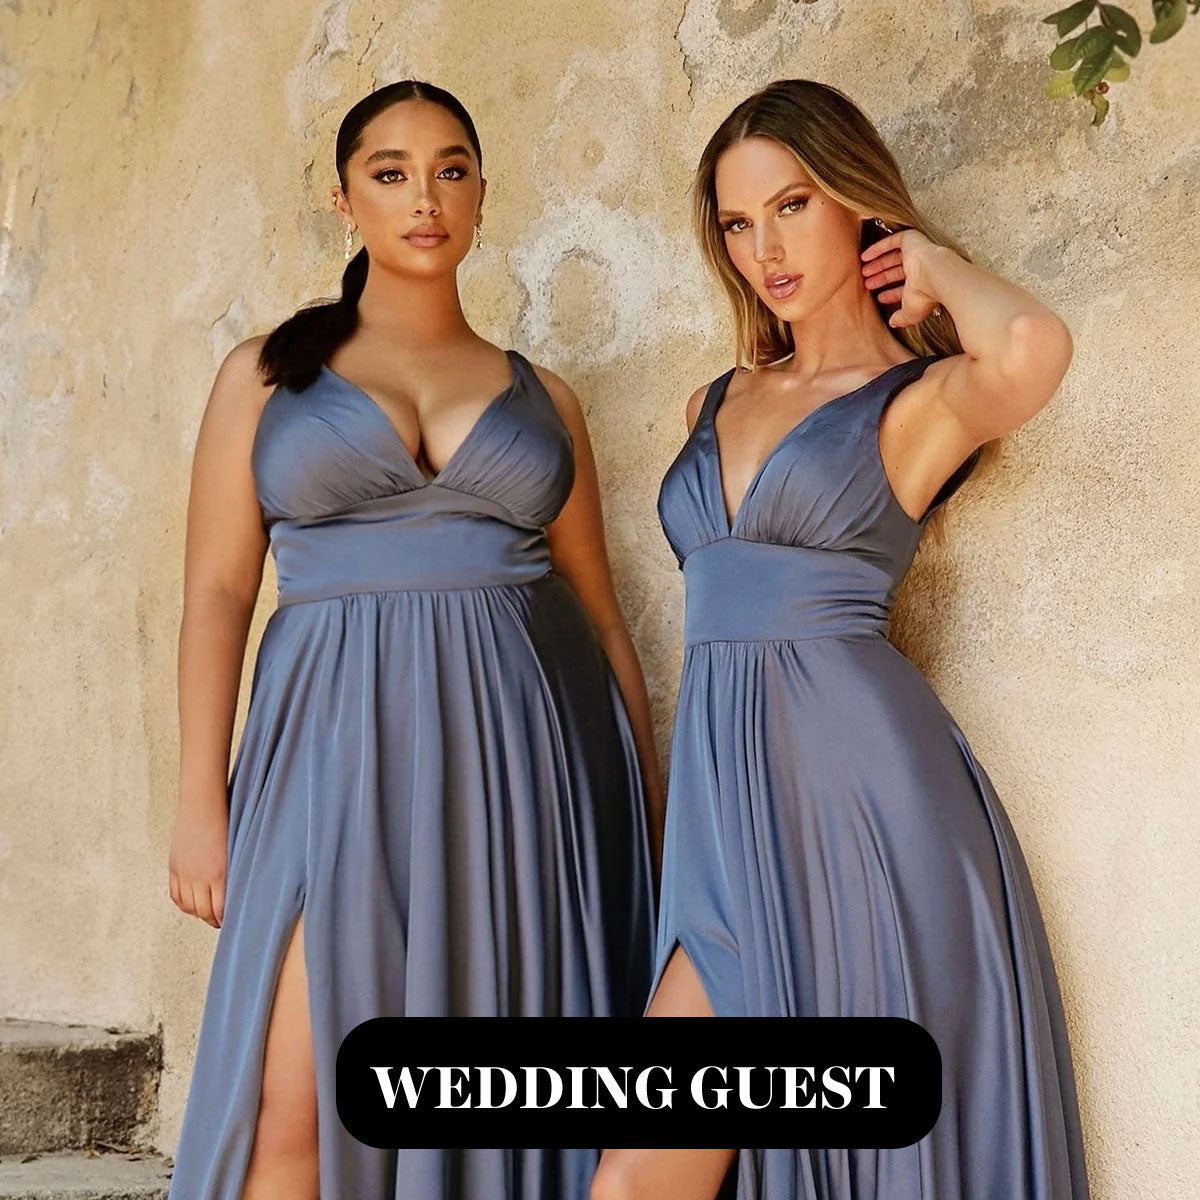 Wedding Party Dresses: 21 Chic Looks  Lace dress design, Prom dresses, Party  dress